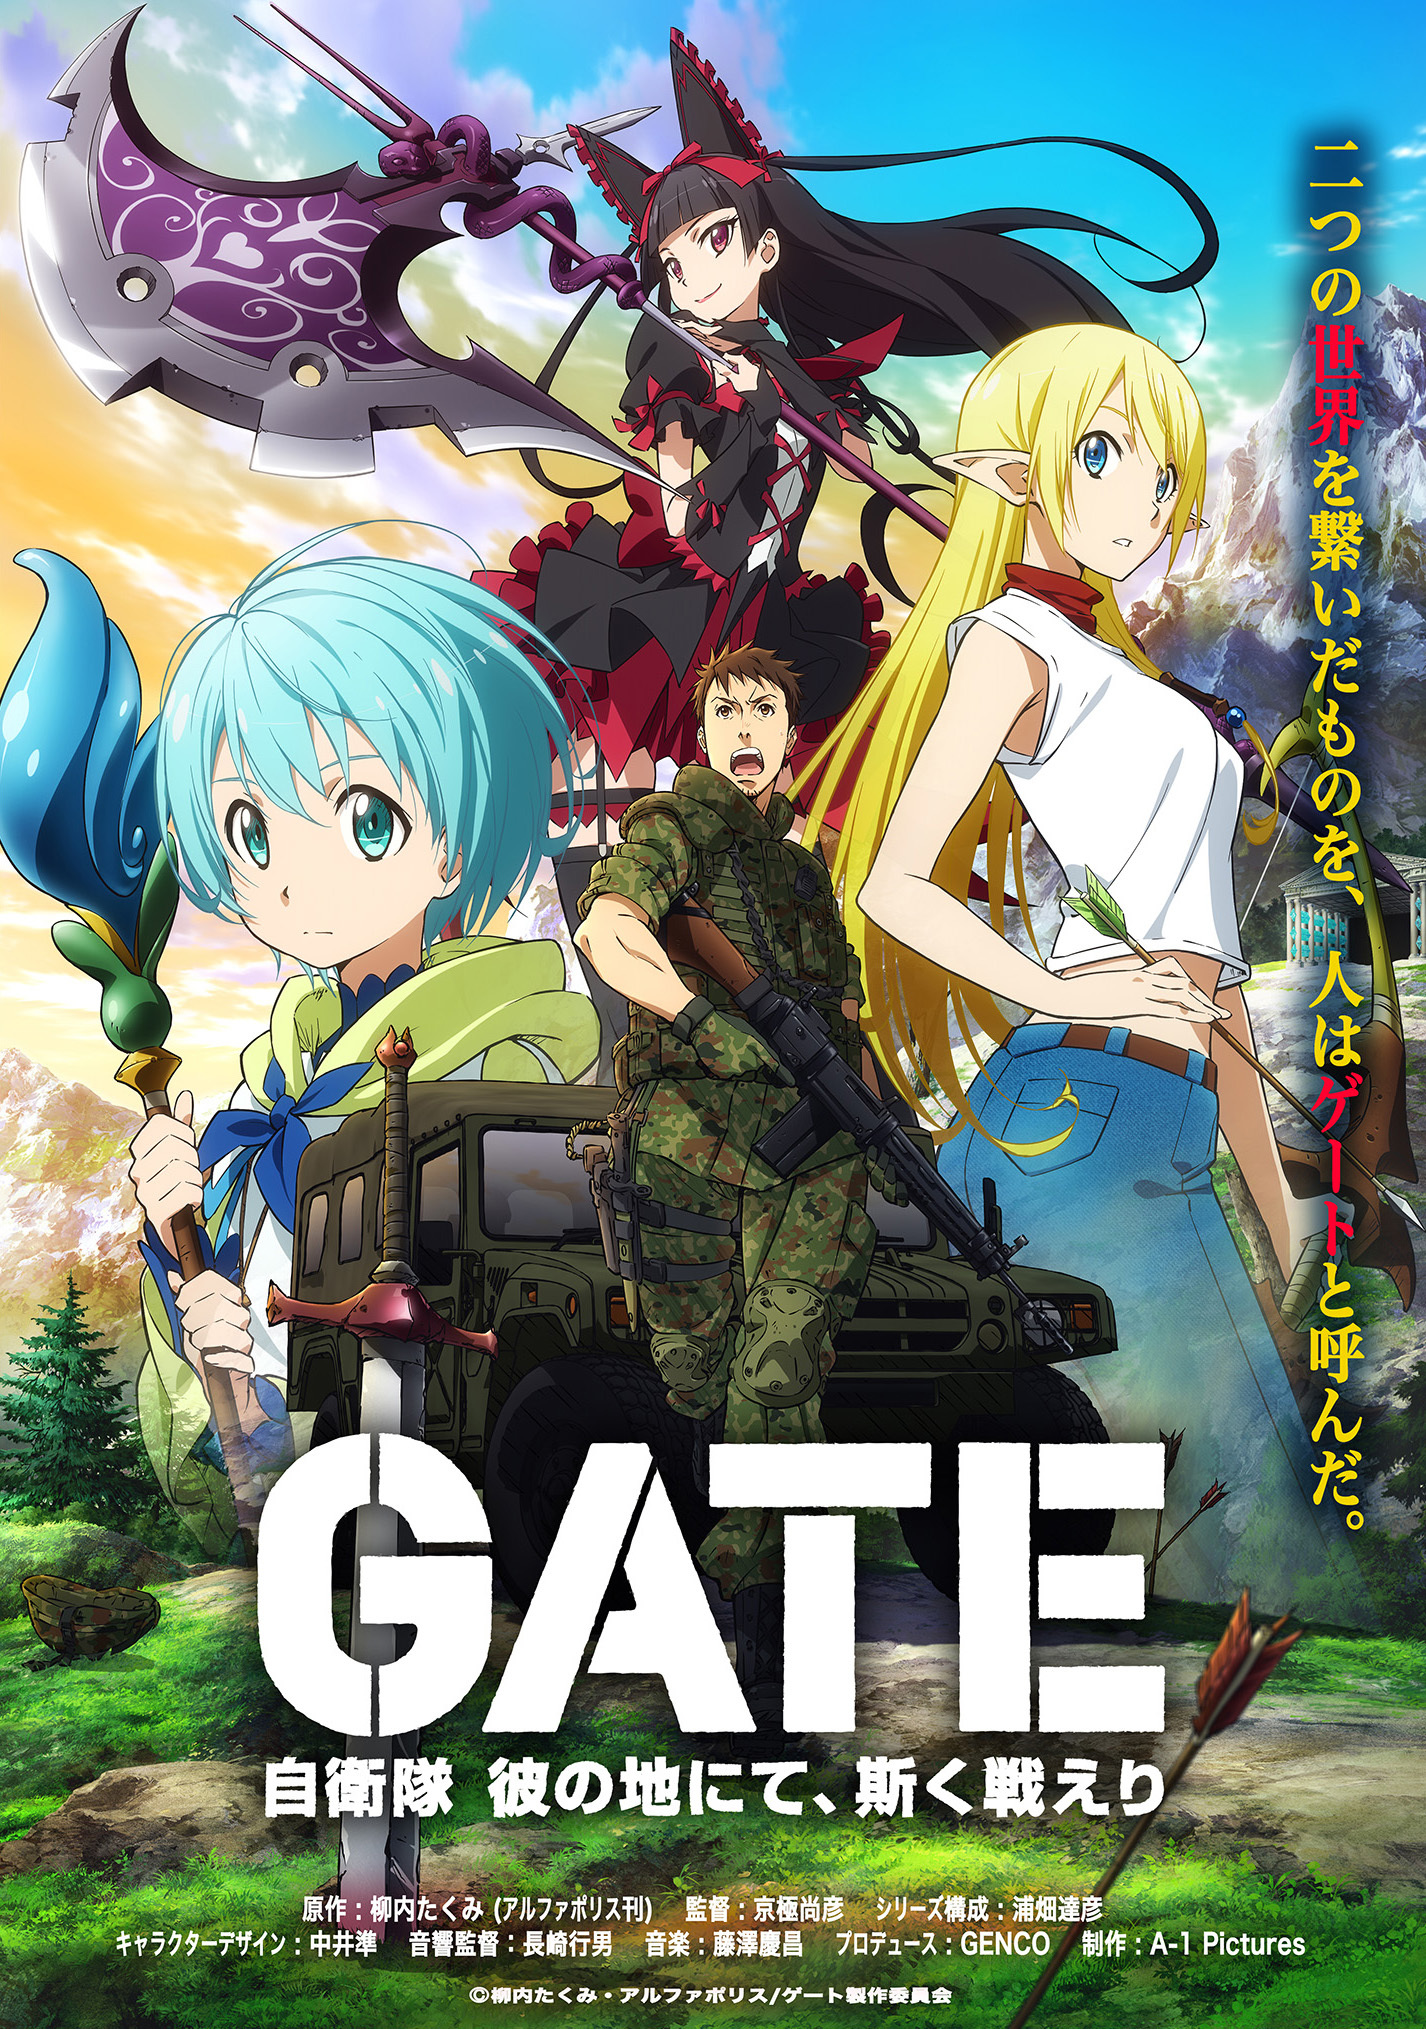 GATE (Series) - Comic Vine